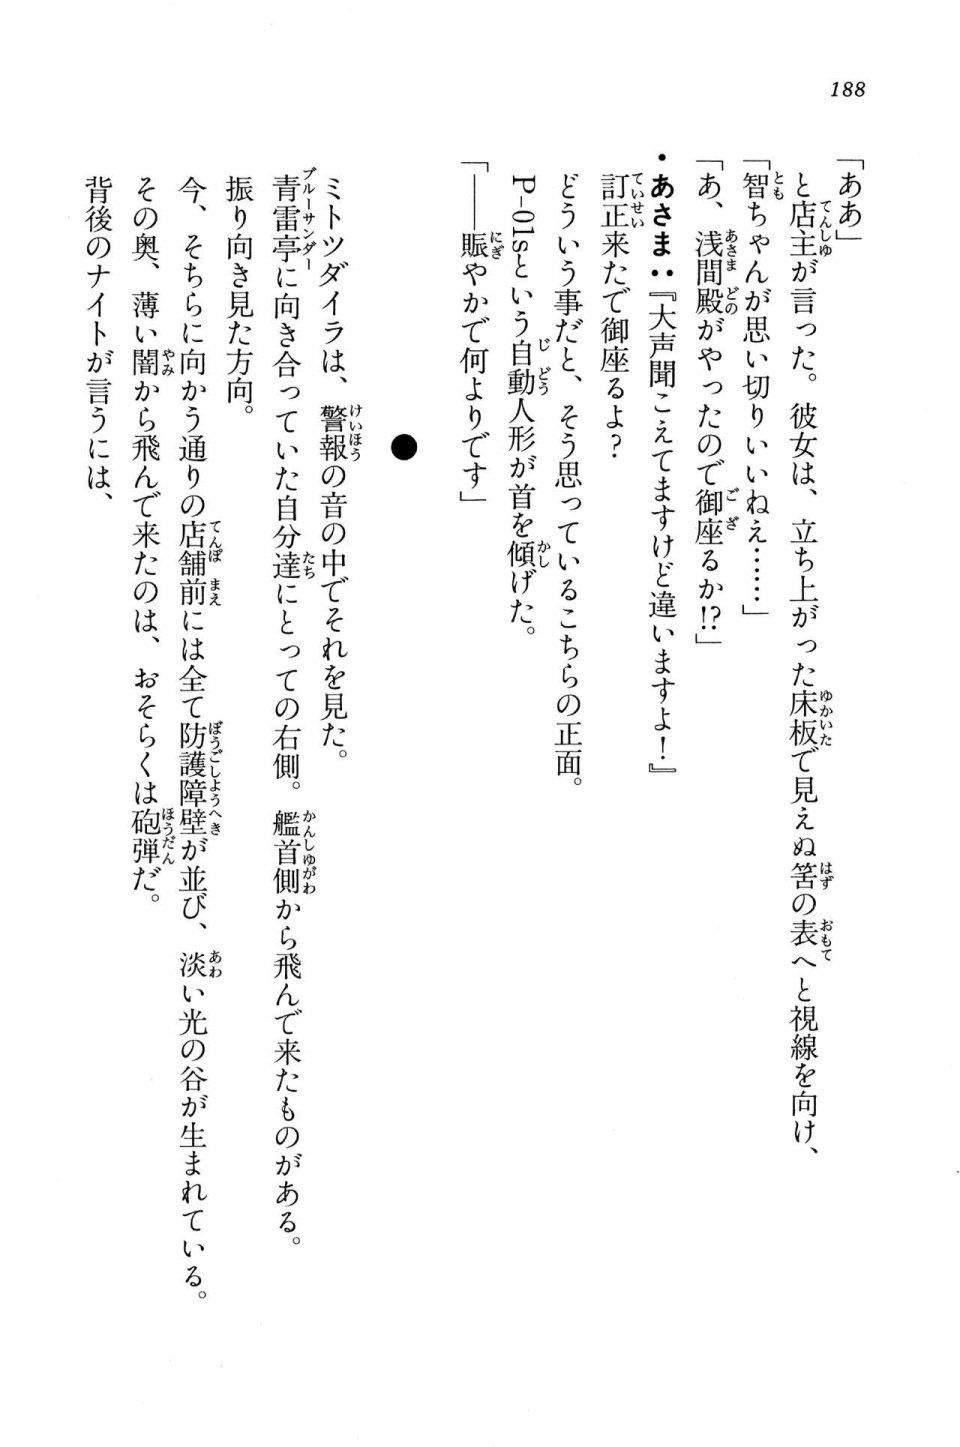 Kyoukai Senjou no Horizon BD Special Mininovel Vol 7(4A) - Photo #192